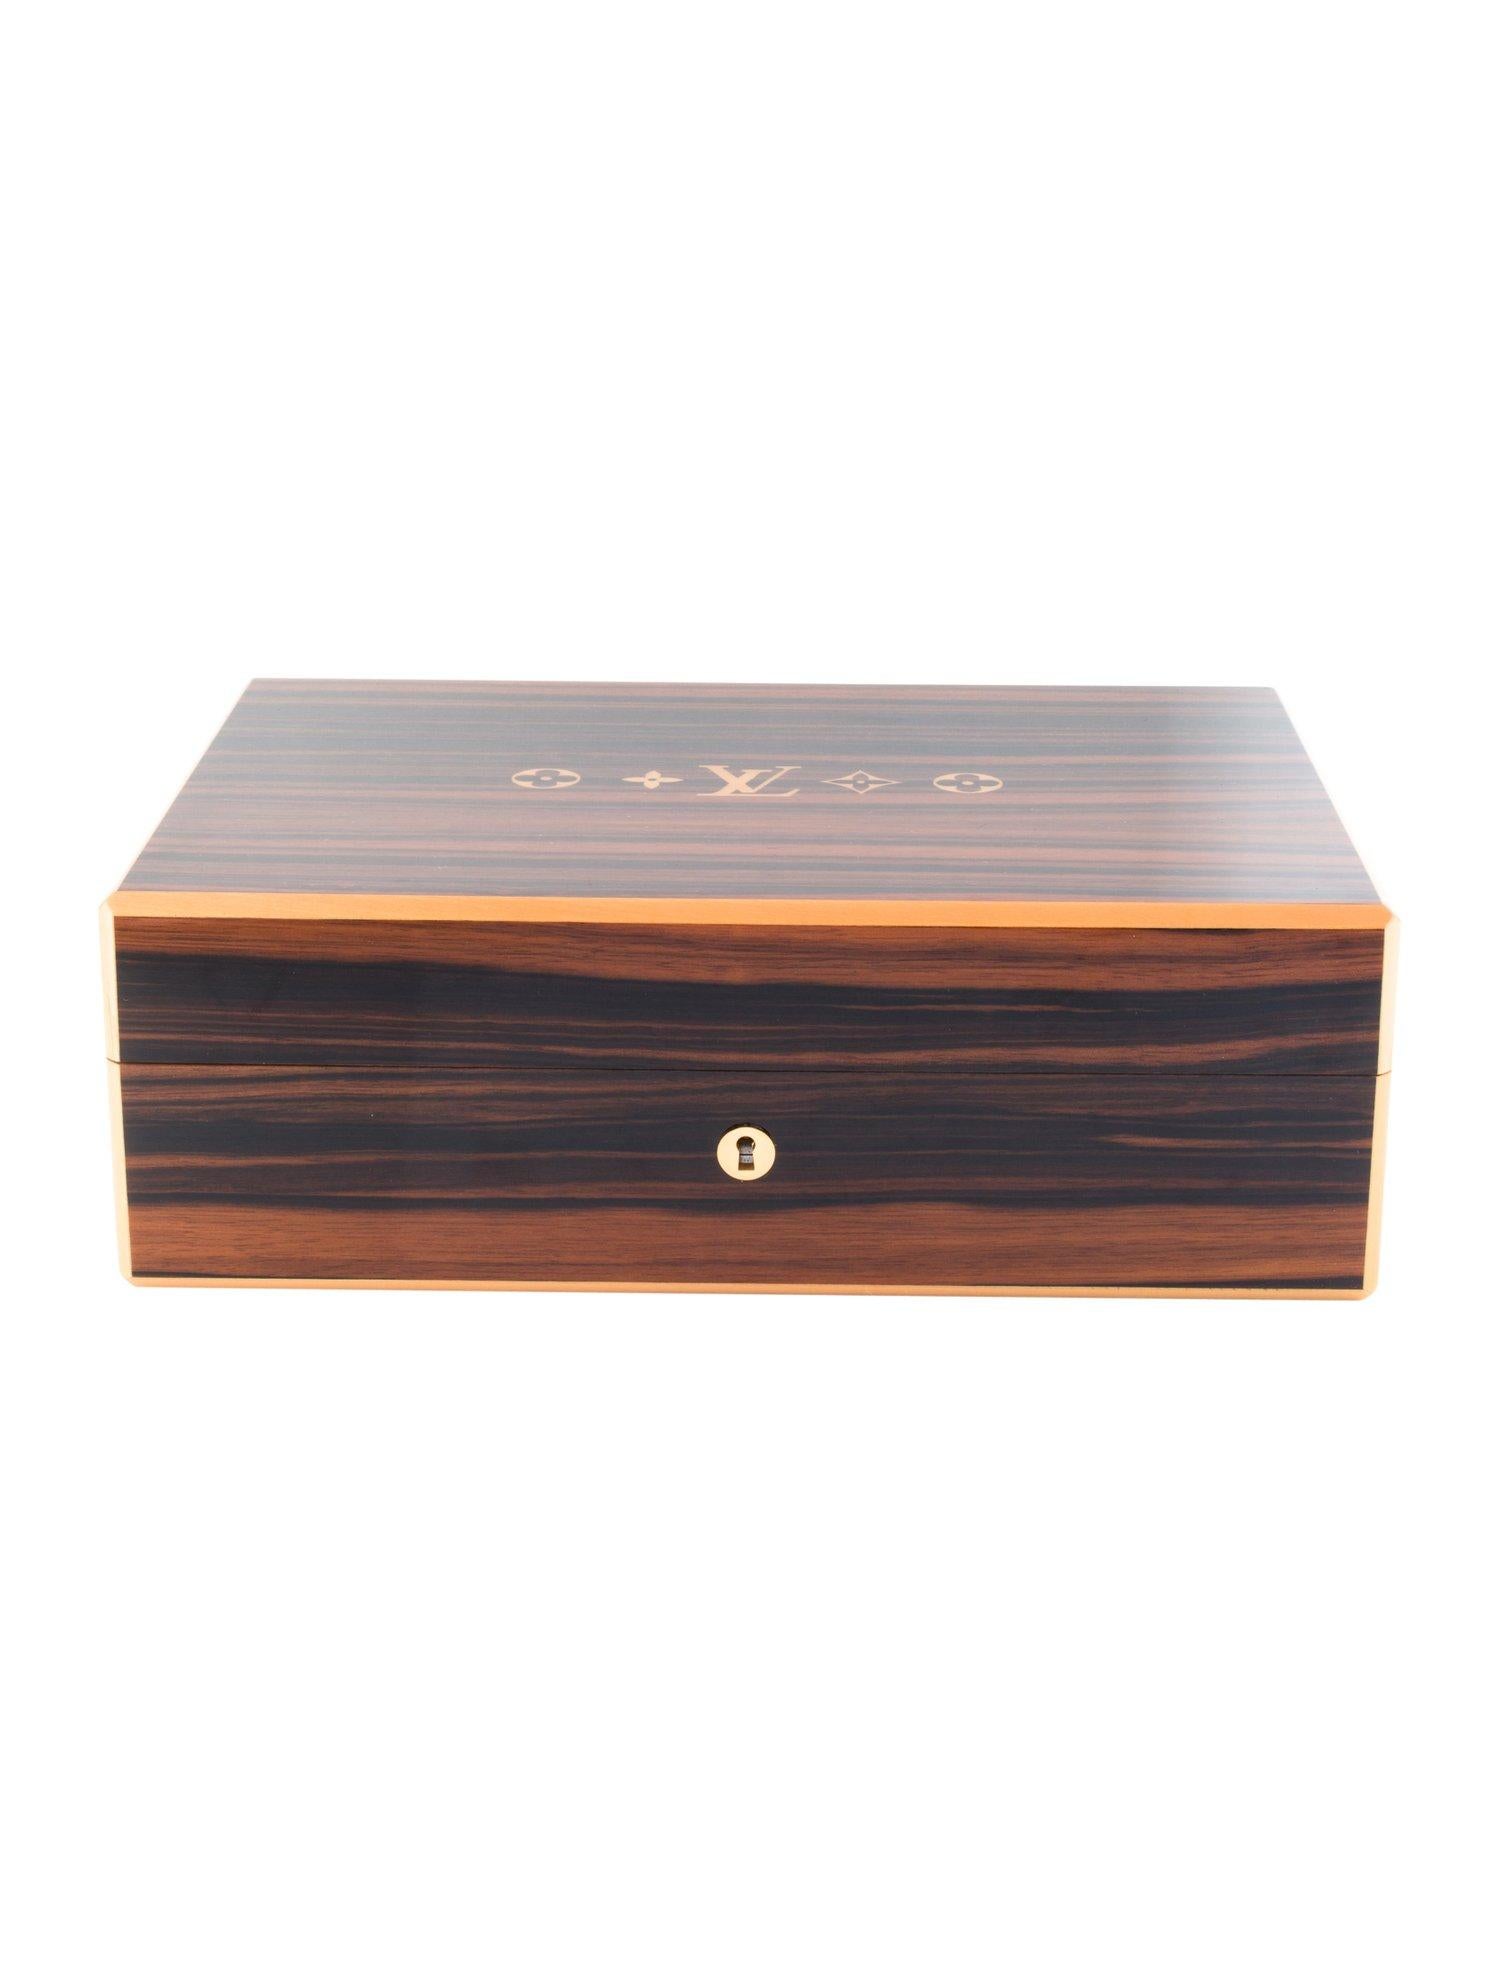 Louis Vuitton Lacquer Wood Desk Men's Cigar Cigarette Humidor Storage Case Box 

Wood
Gold tone hardware
Lockable closure 
Made in France
Measures 13